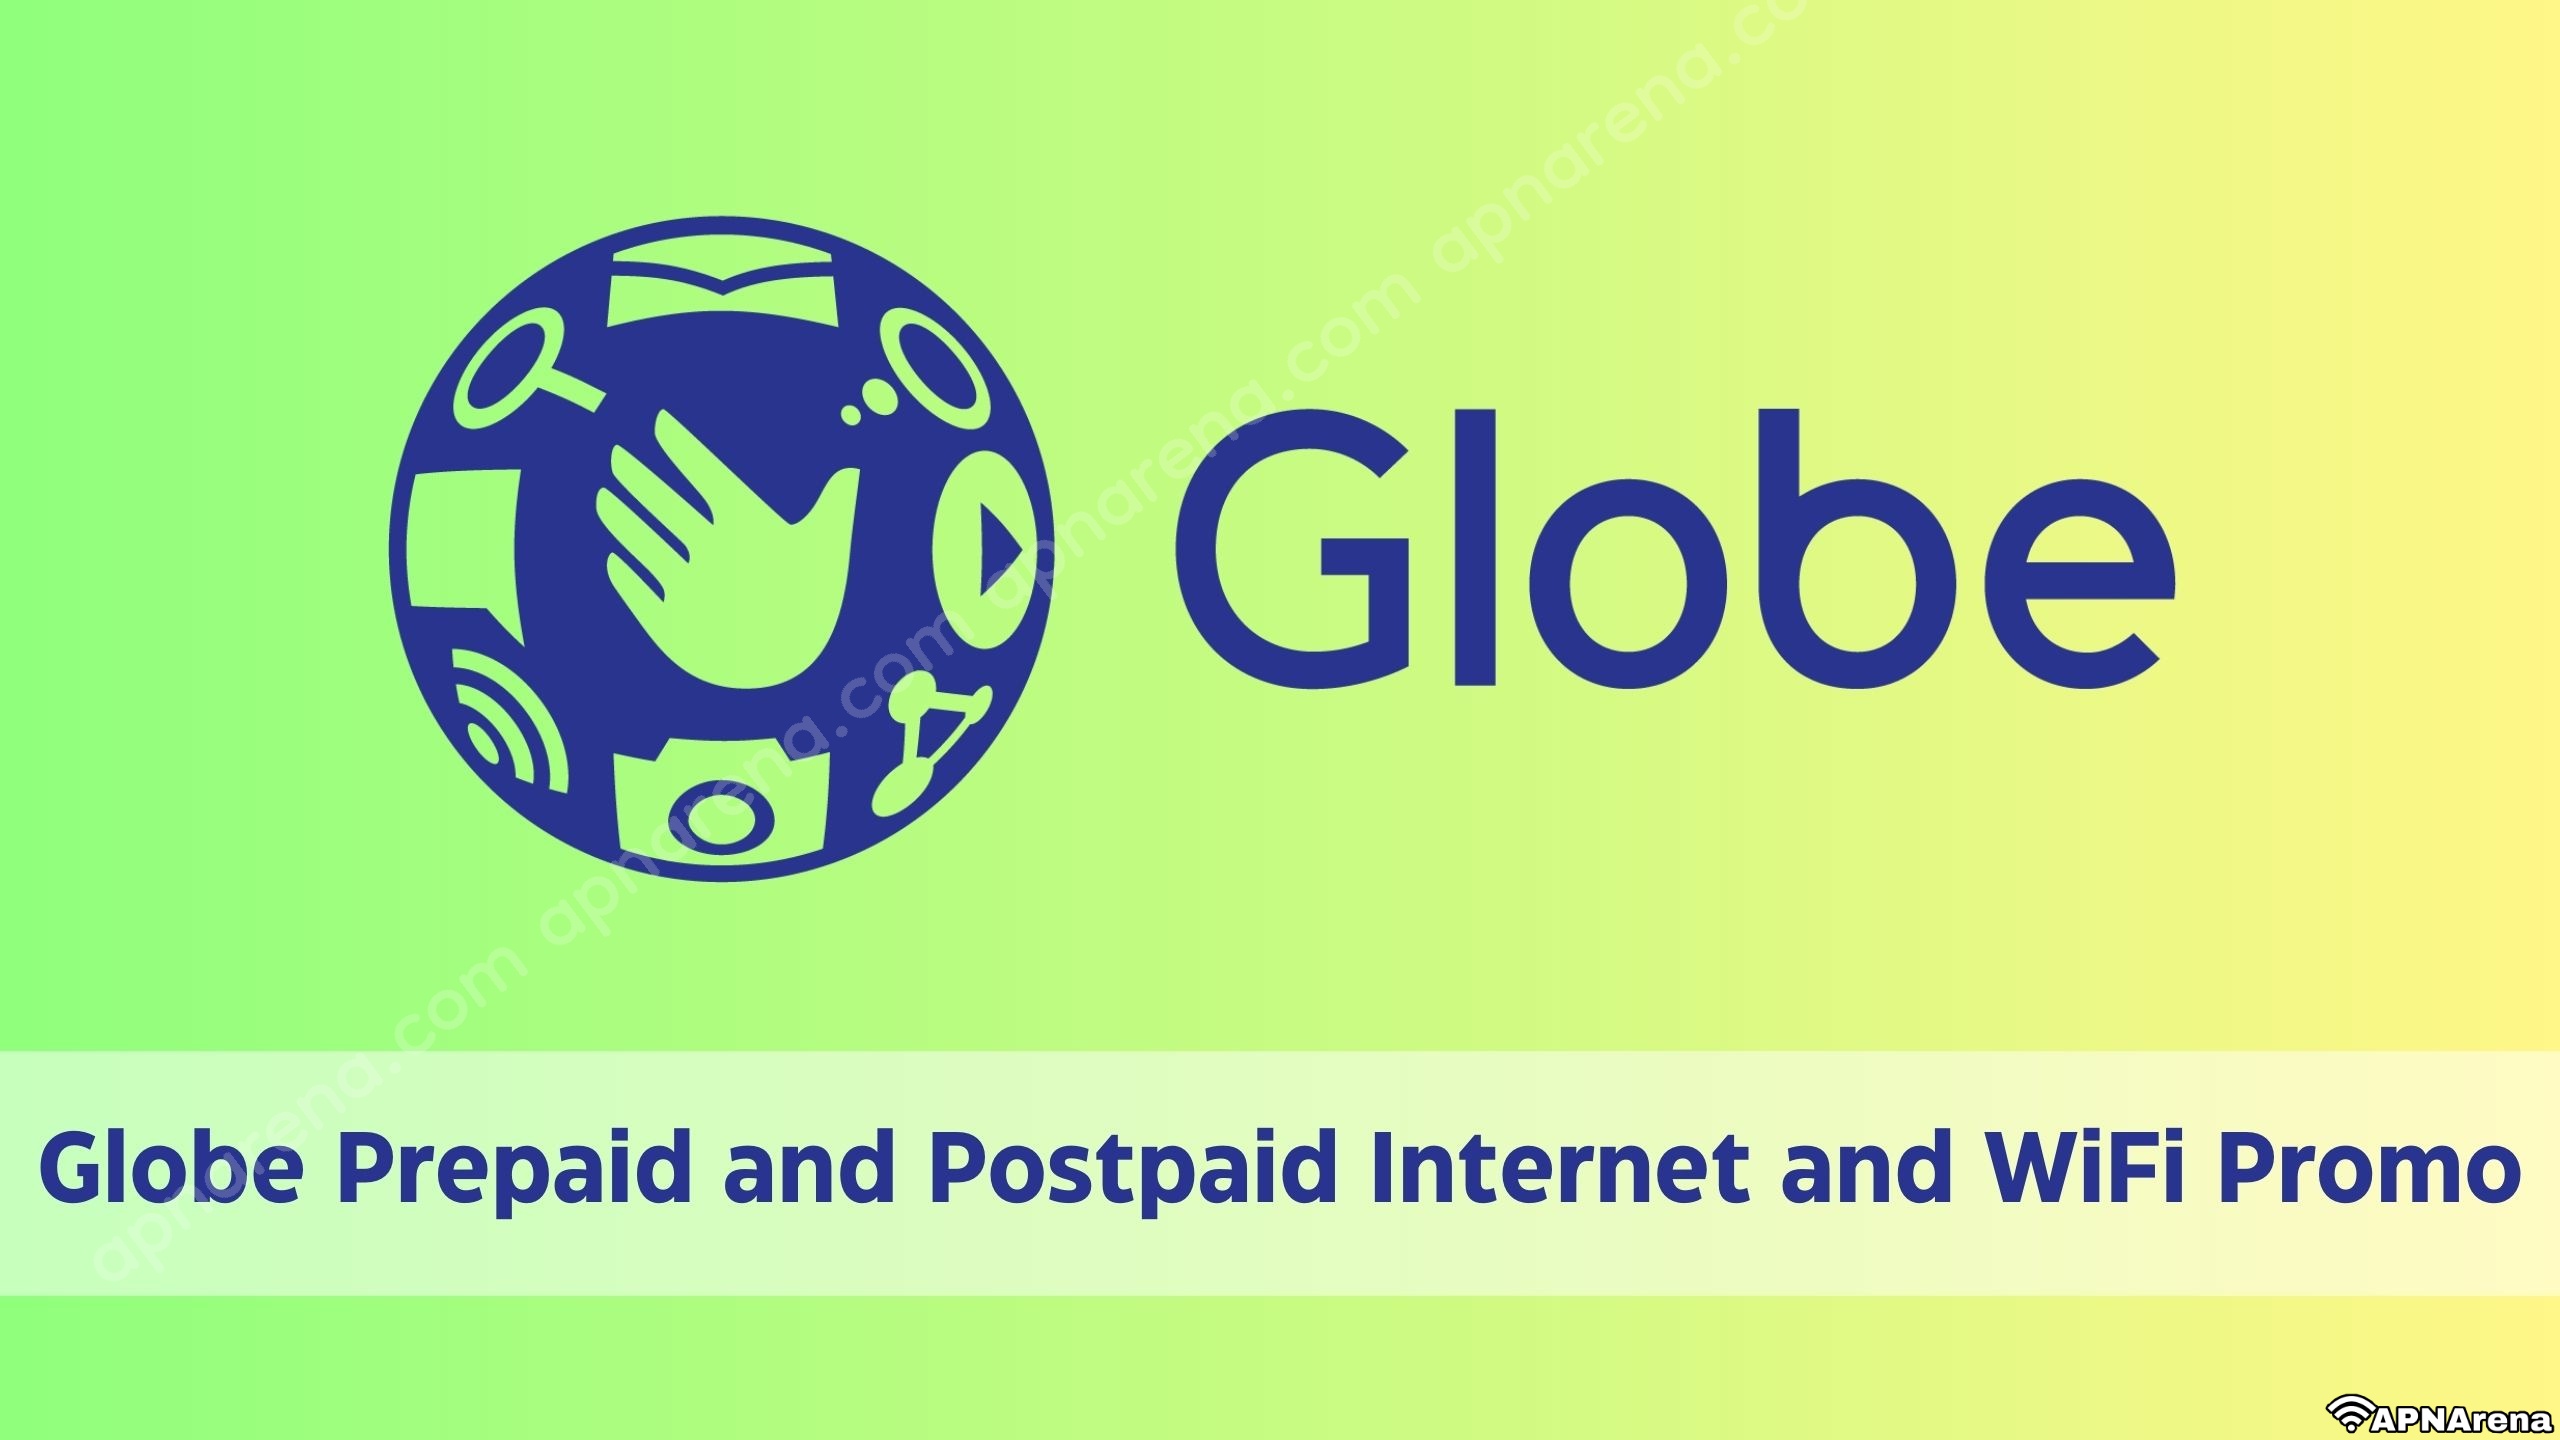 Globe Prepaid Mobile Legends Promo: 10 Pesos for Unlimited Access - wide 9